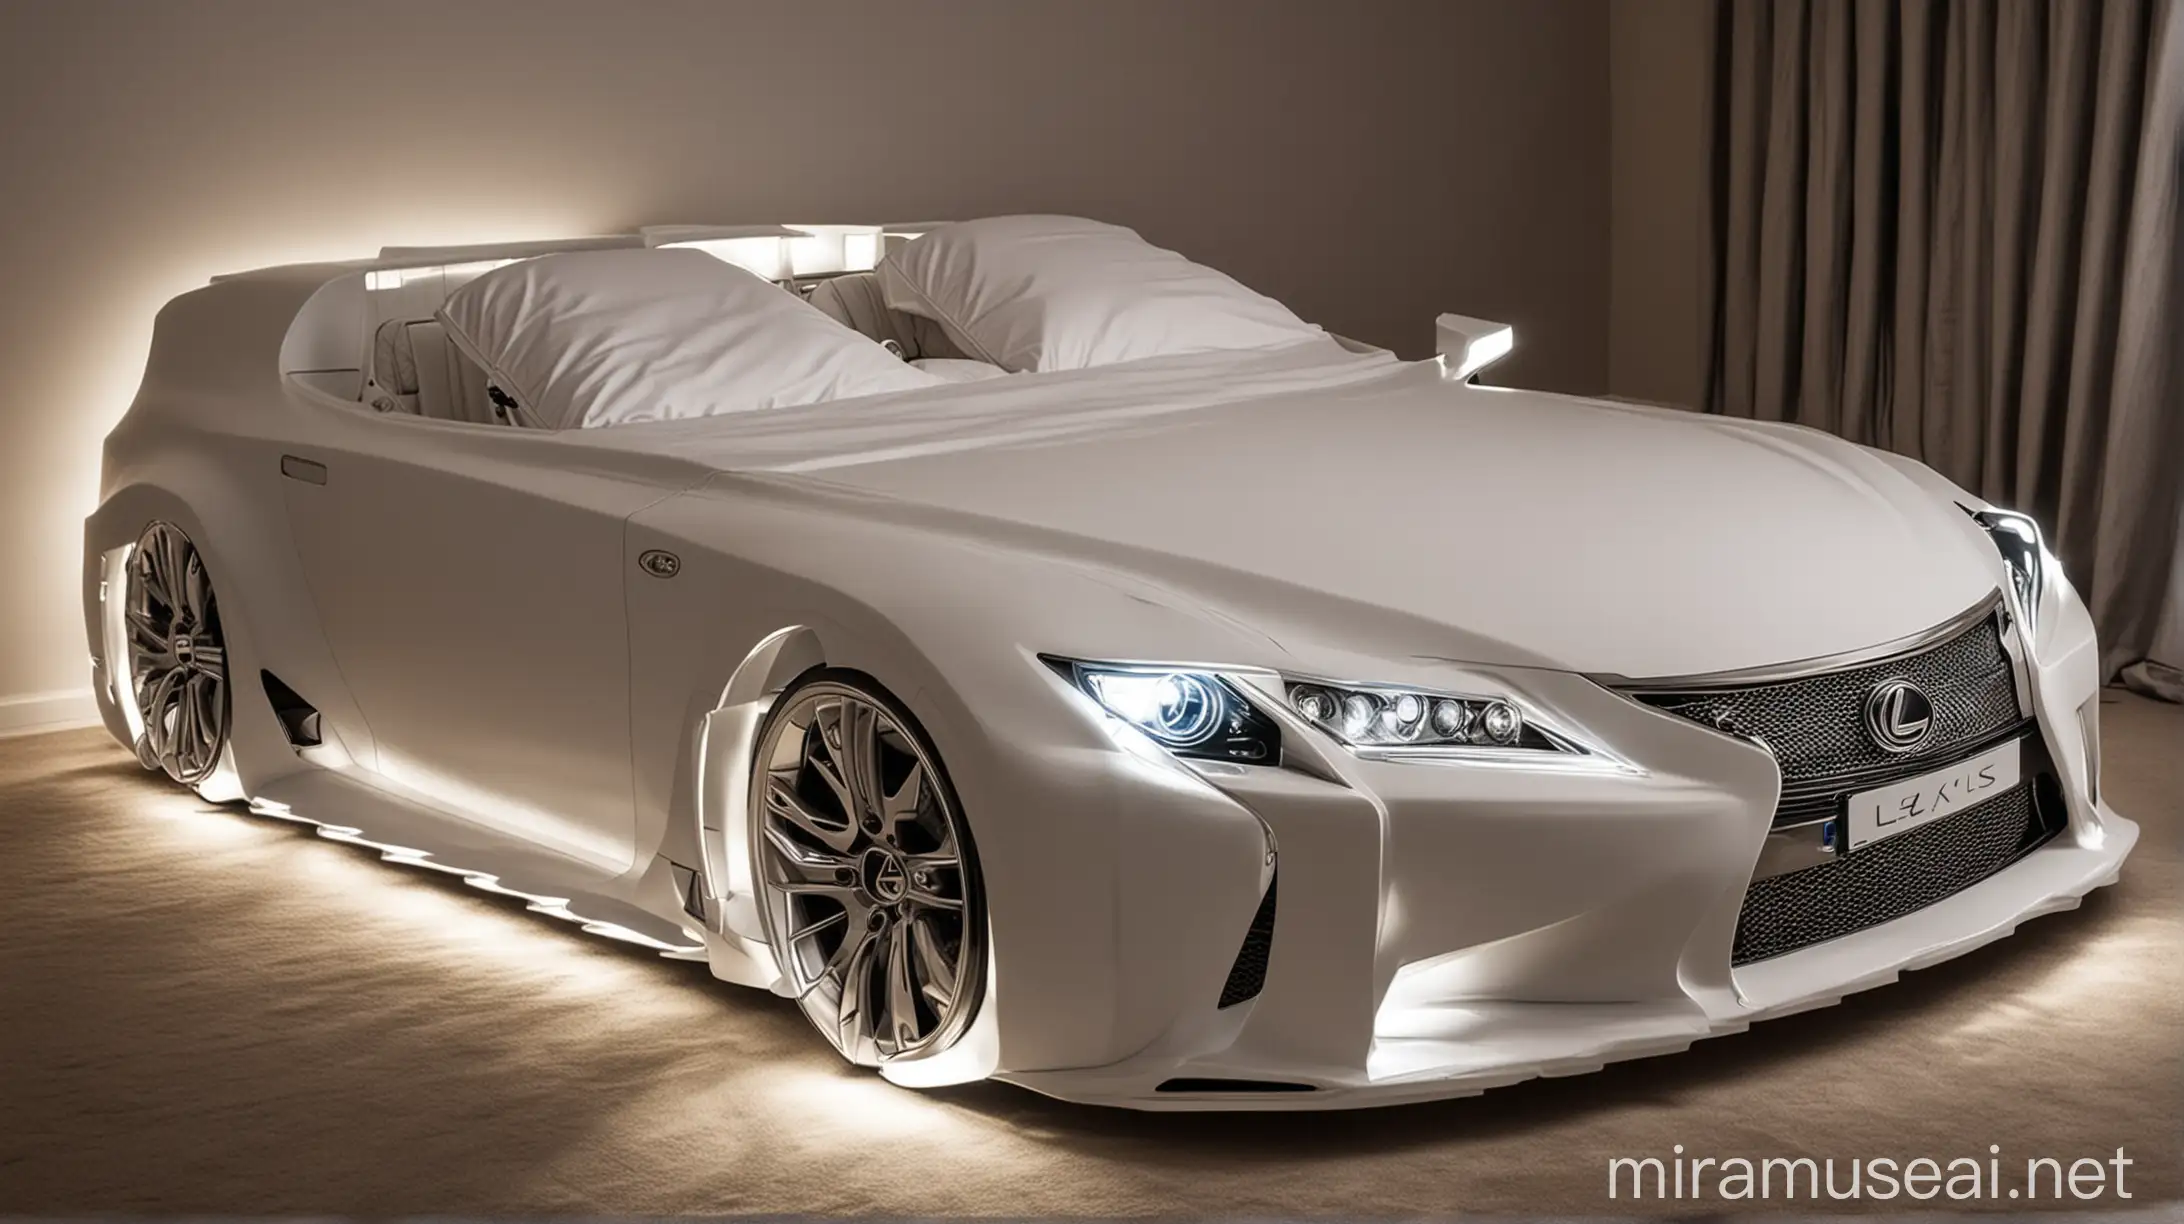 Luxury Dream Lexus CarShaped Double Bed with Illuminated Headlights